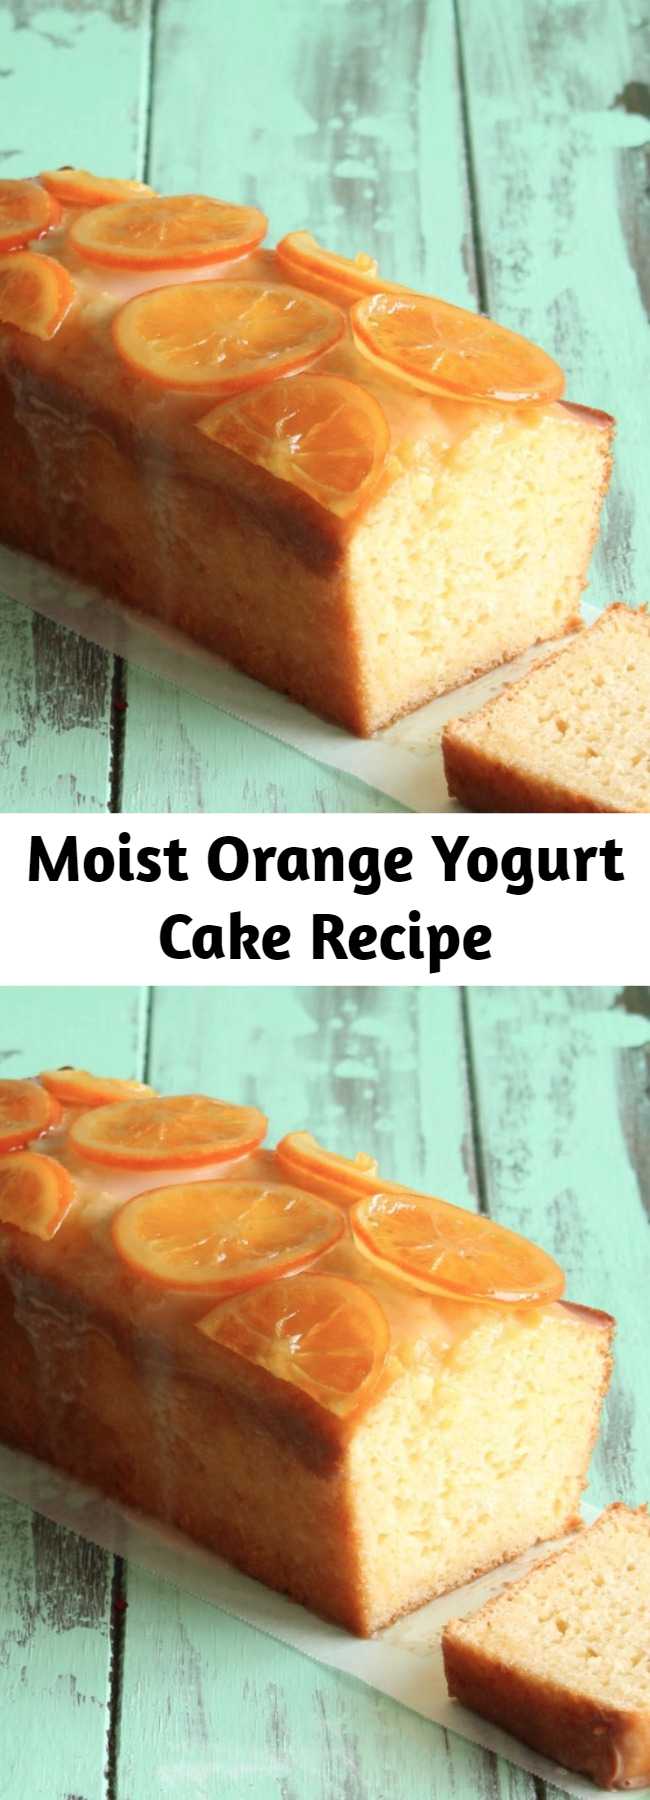 Moist Orange Yogurt Cake Recipe - Moist orange yogurt cake loaf with candied oranges and an orange glaze.